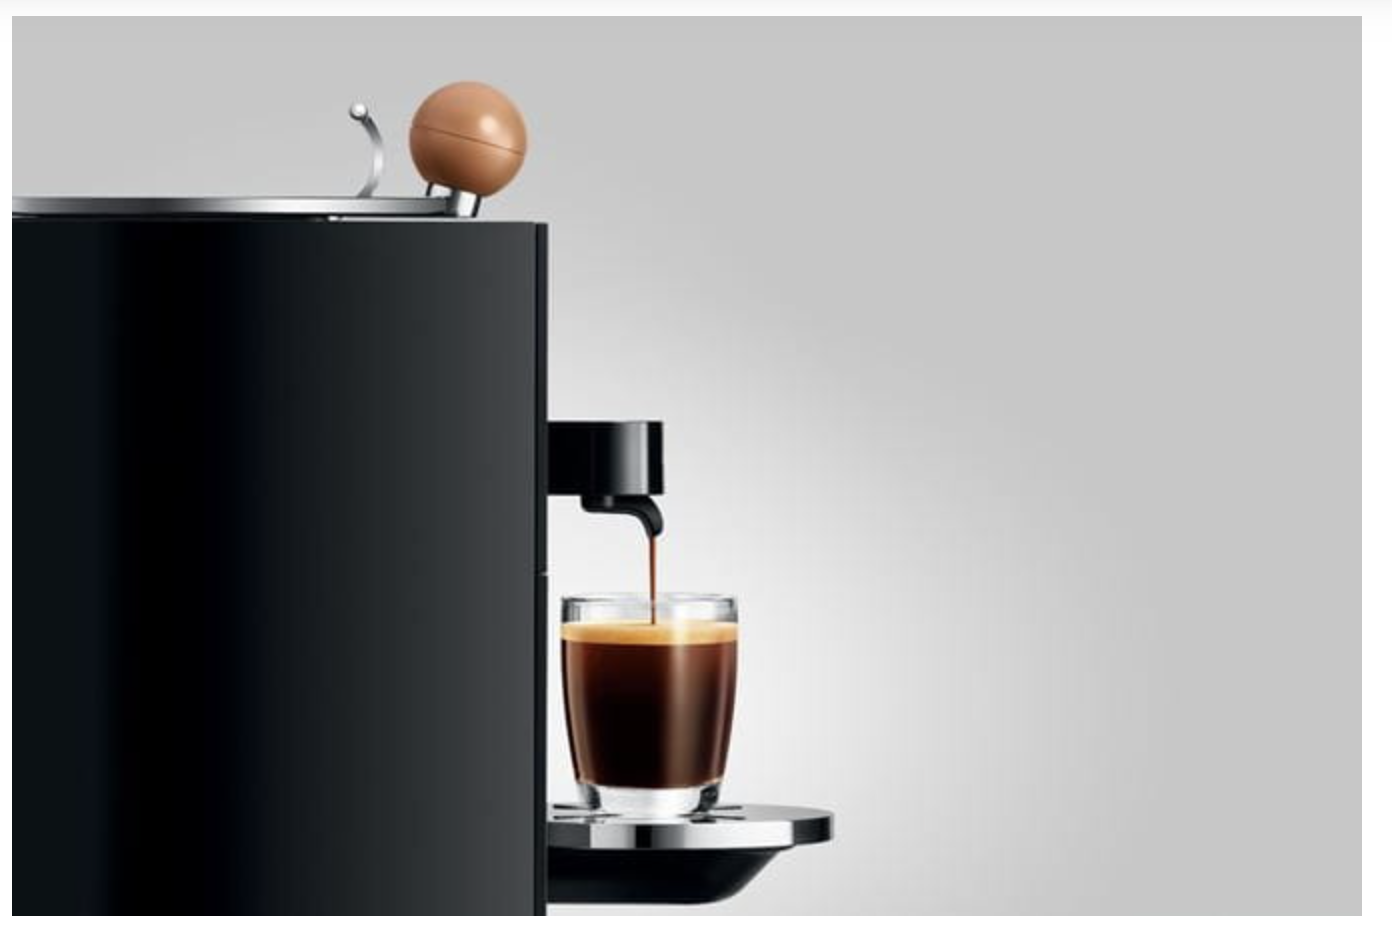 JURA 15505 espresso machine